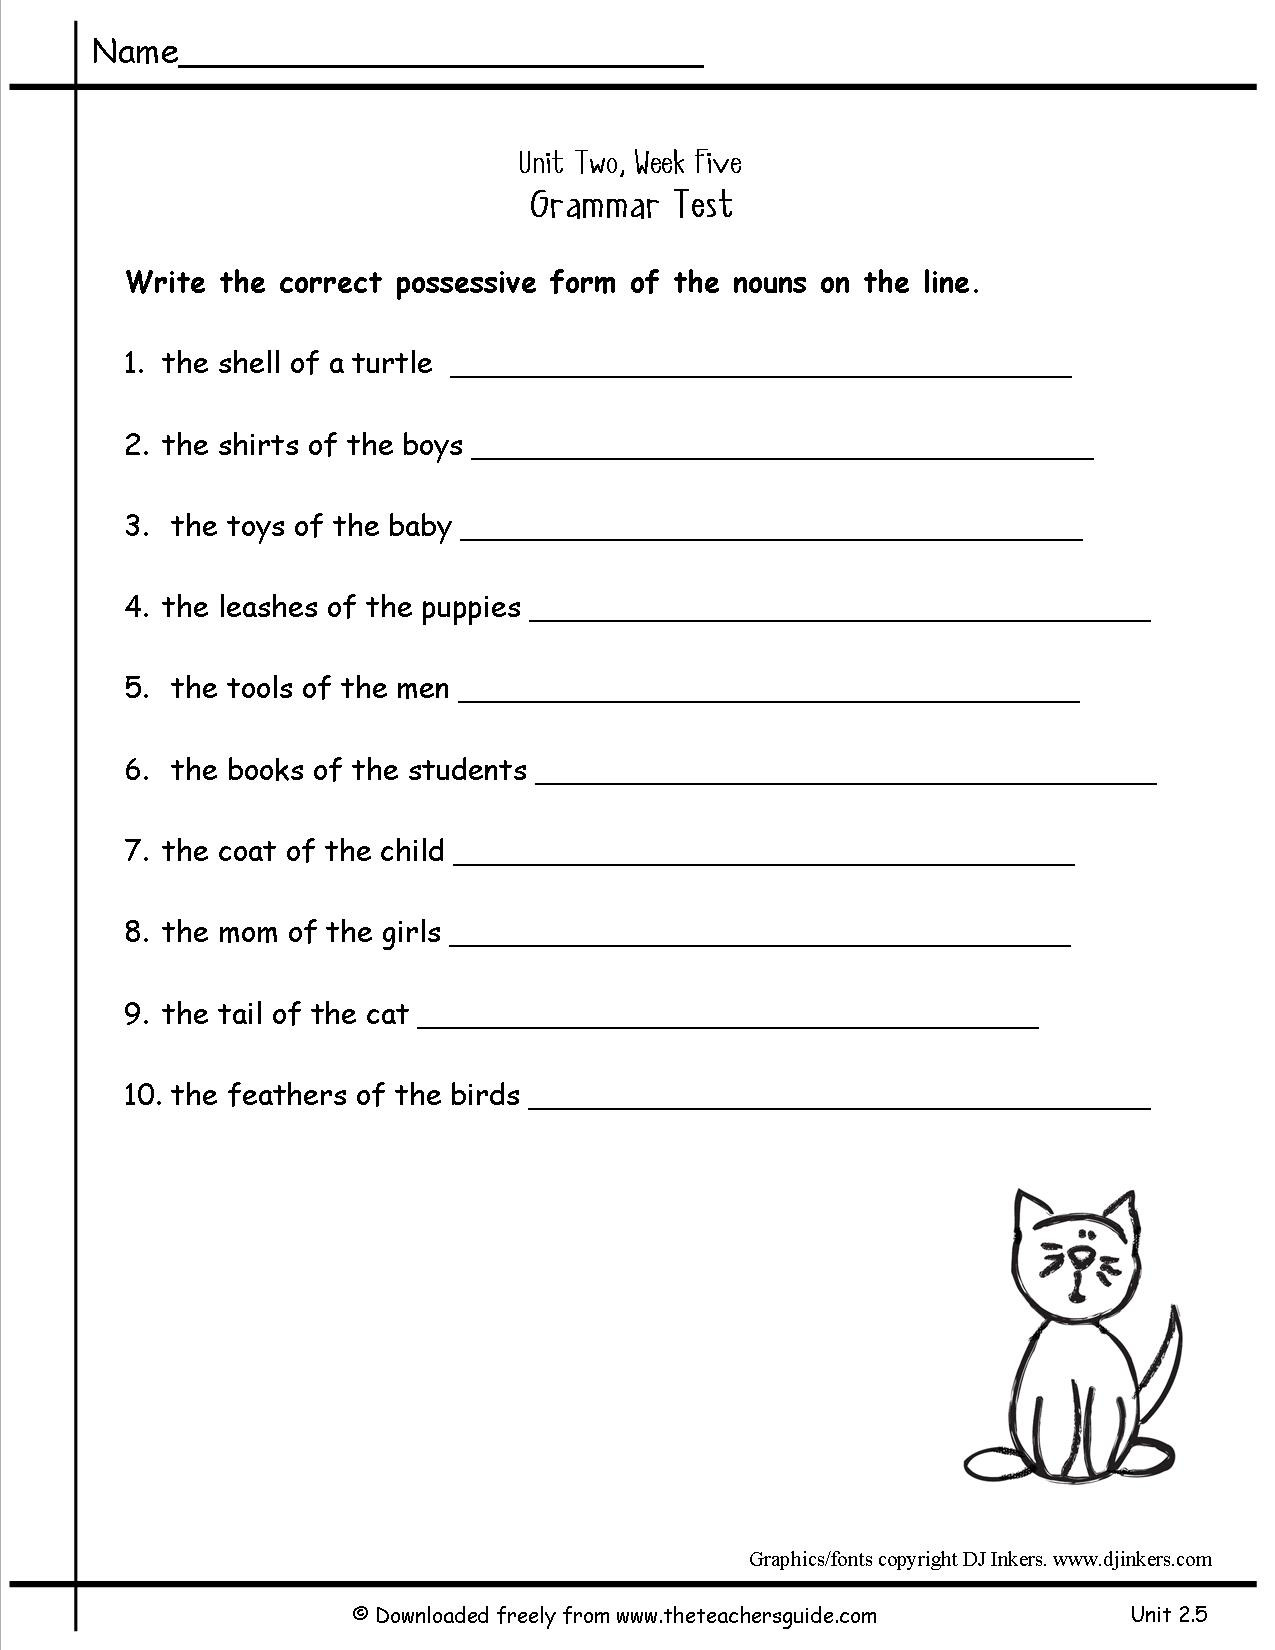 Possessive Pronouns Worksheet 2nd Grade Free Pronoun Worksheet for 2nd Grade